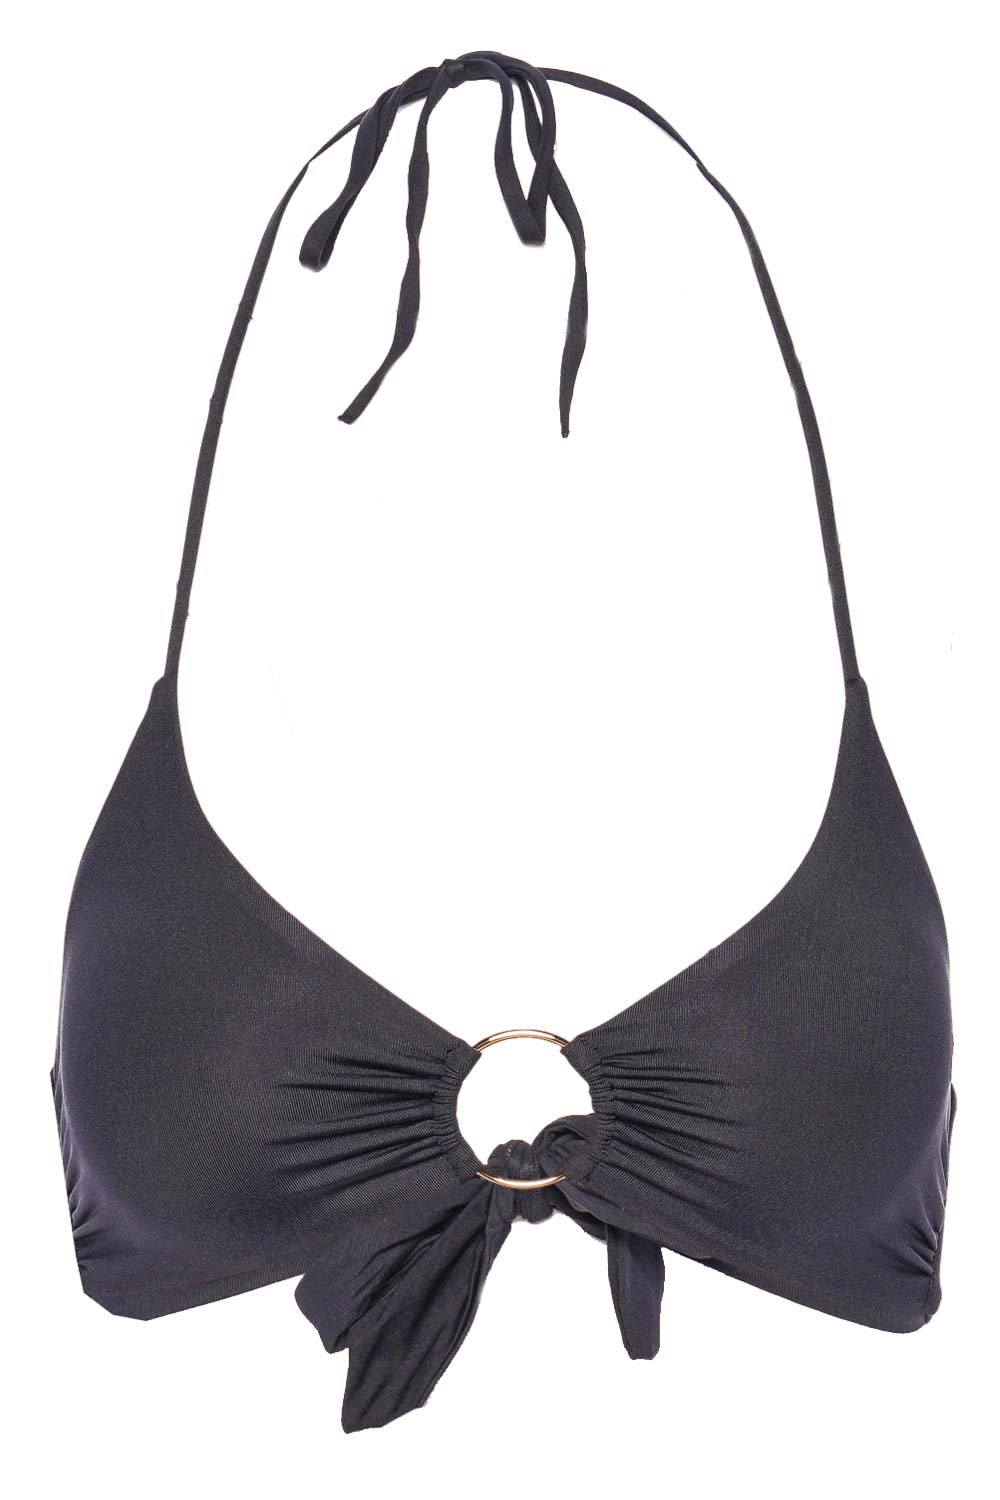 Melissa Odabash Hamburg Black Halter Bikini Top